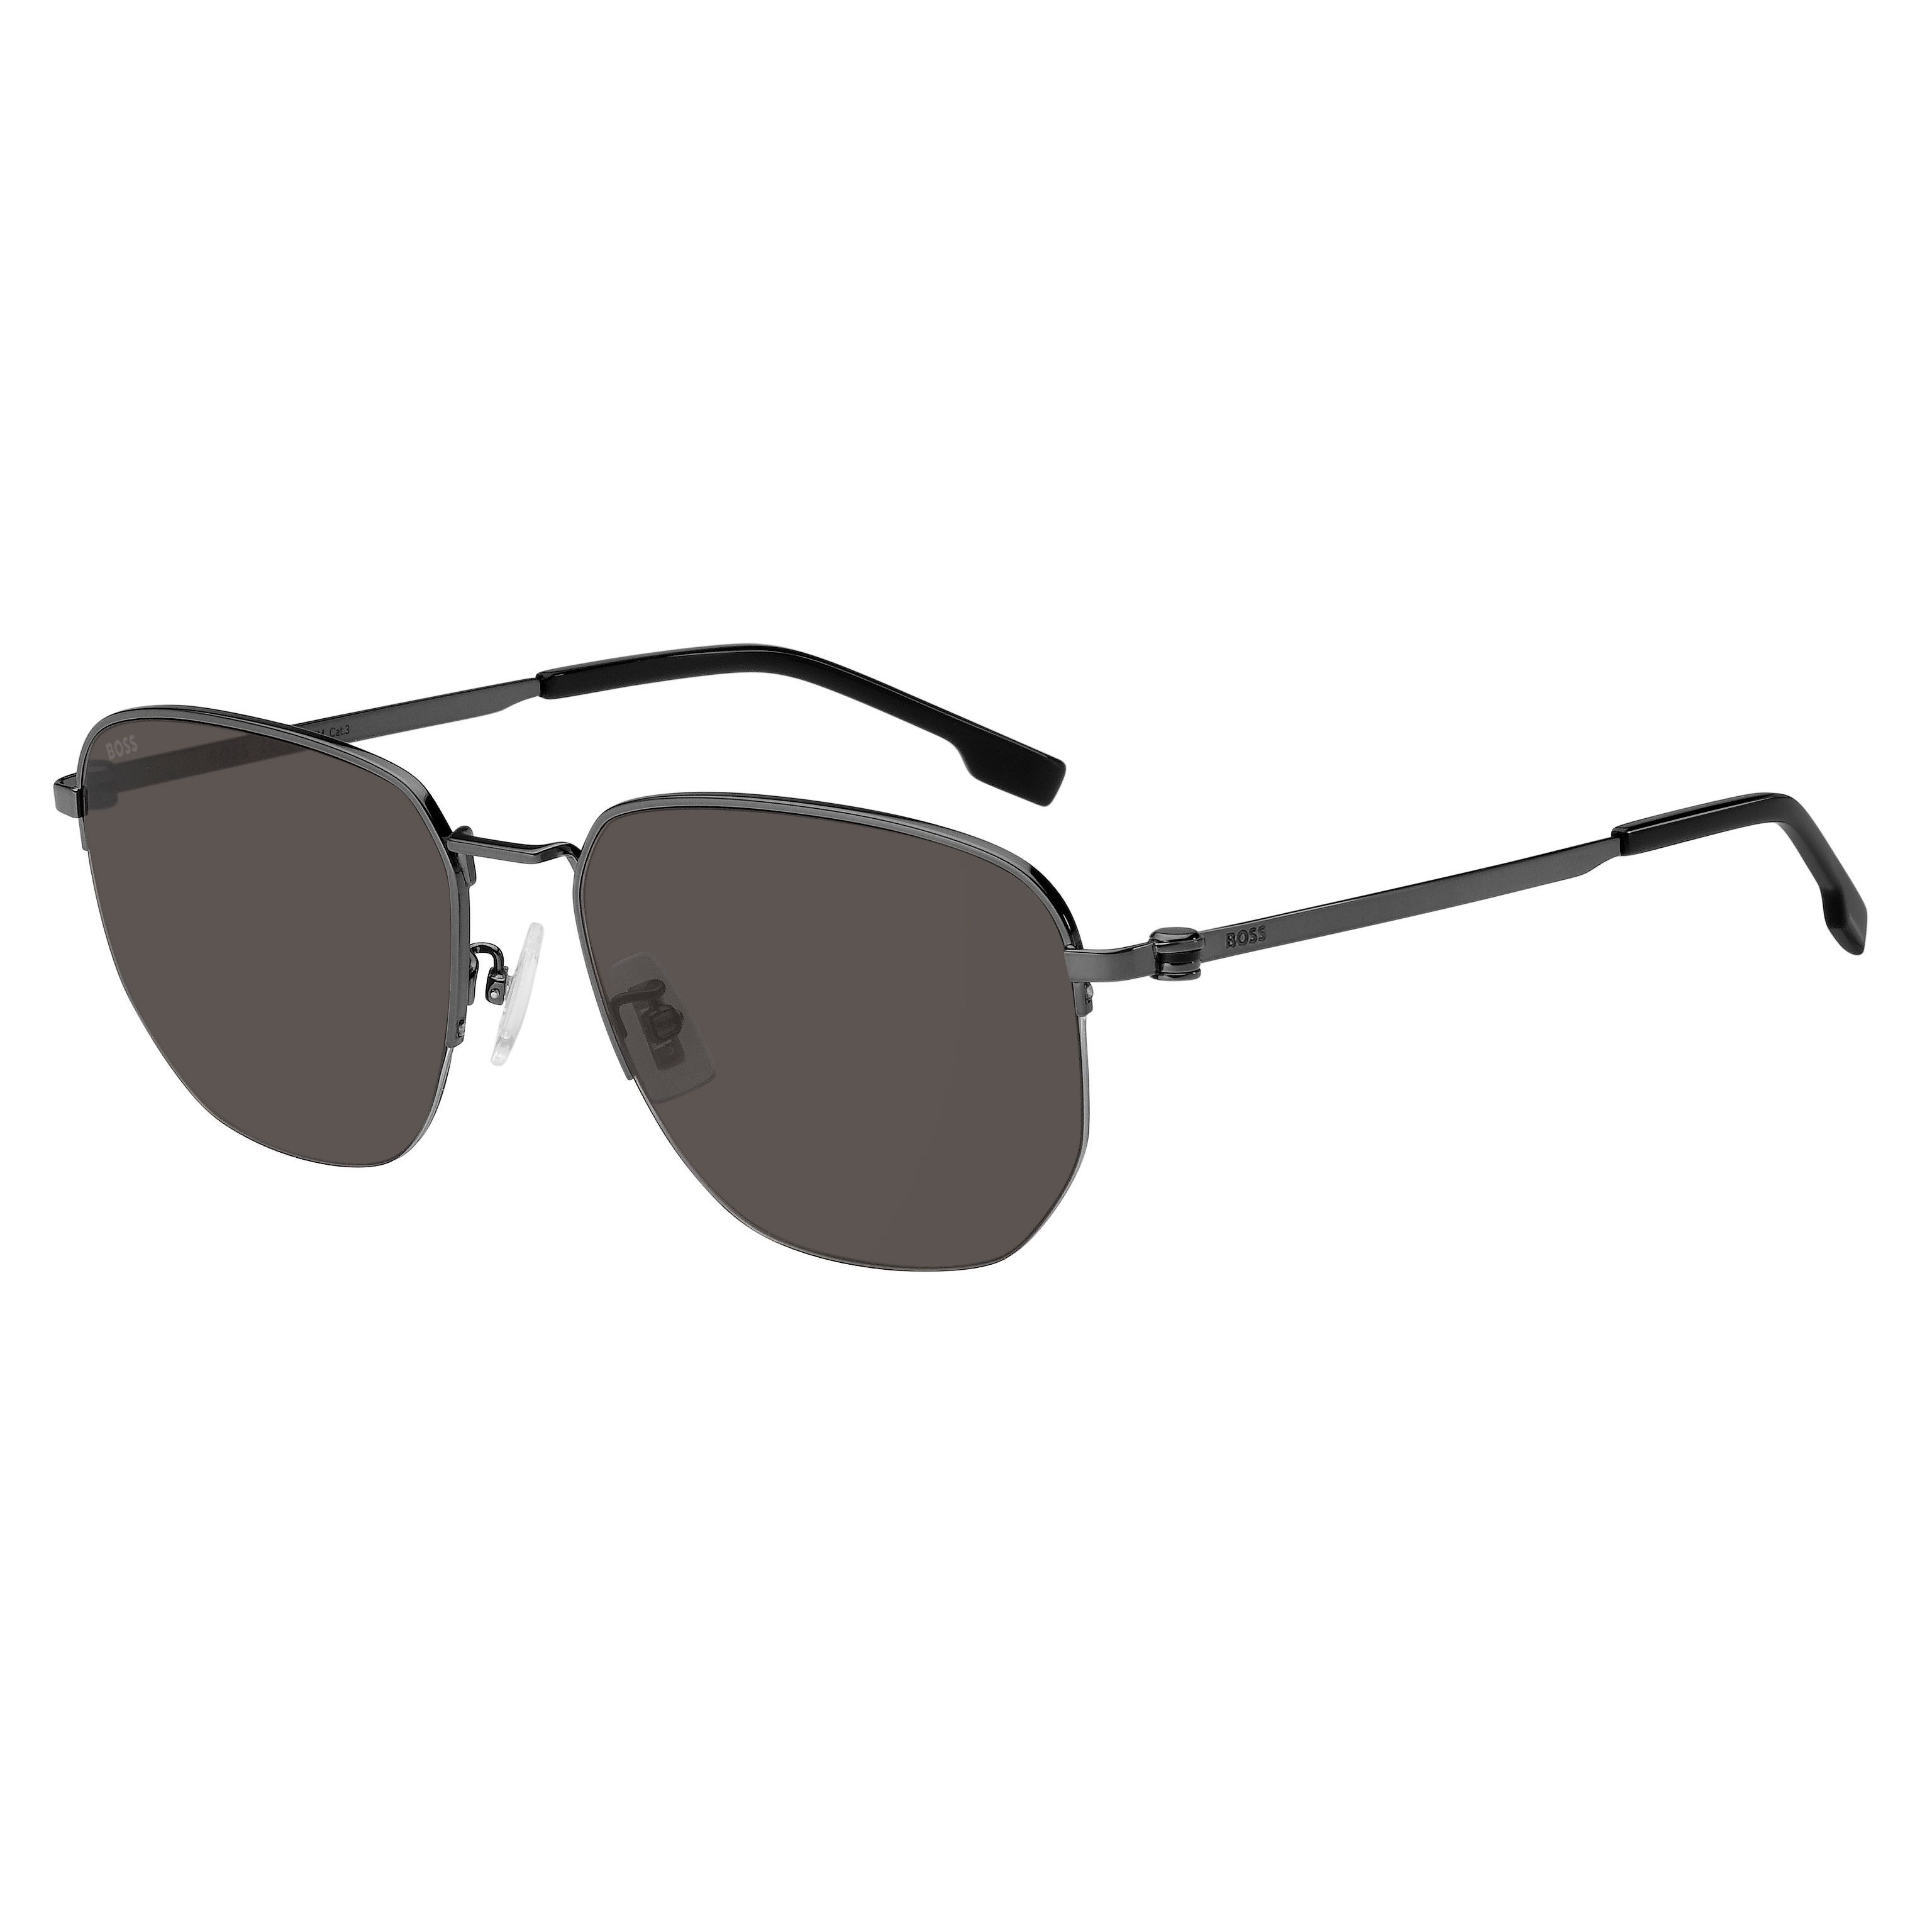 BOSS 1538 F SK Square Sunglasses V81IR - size 57